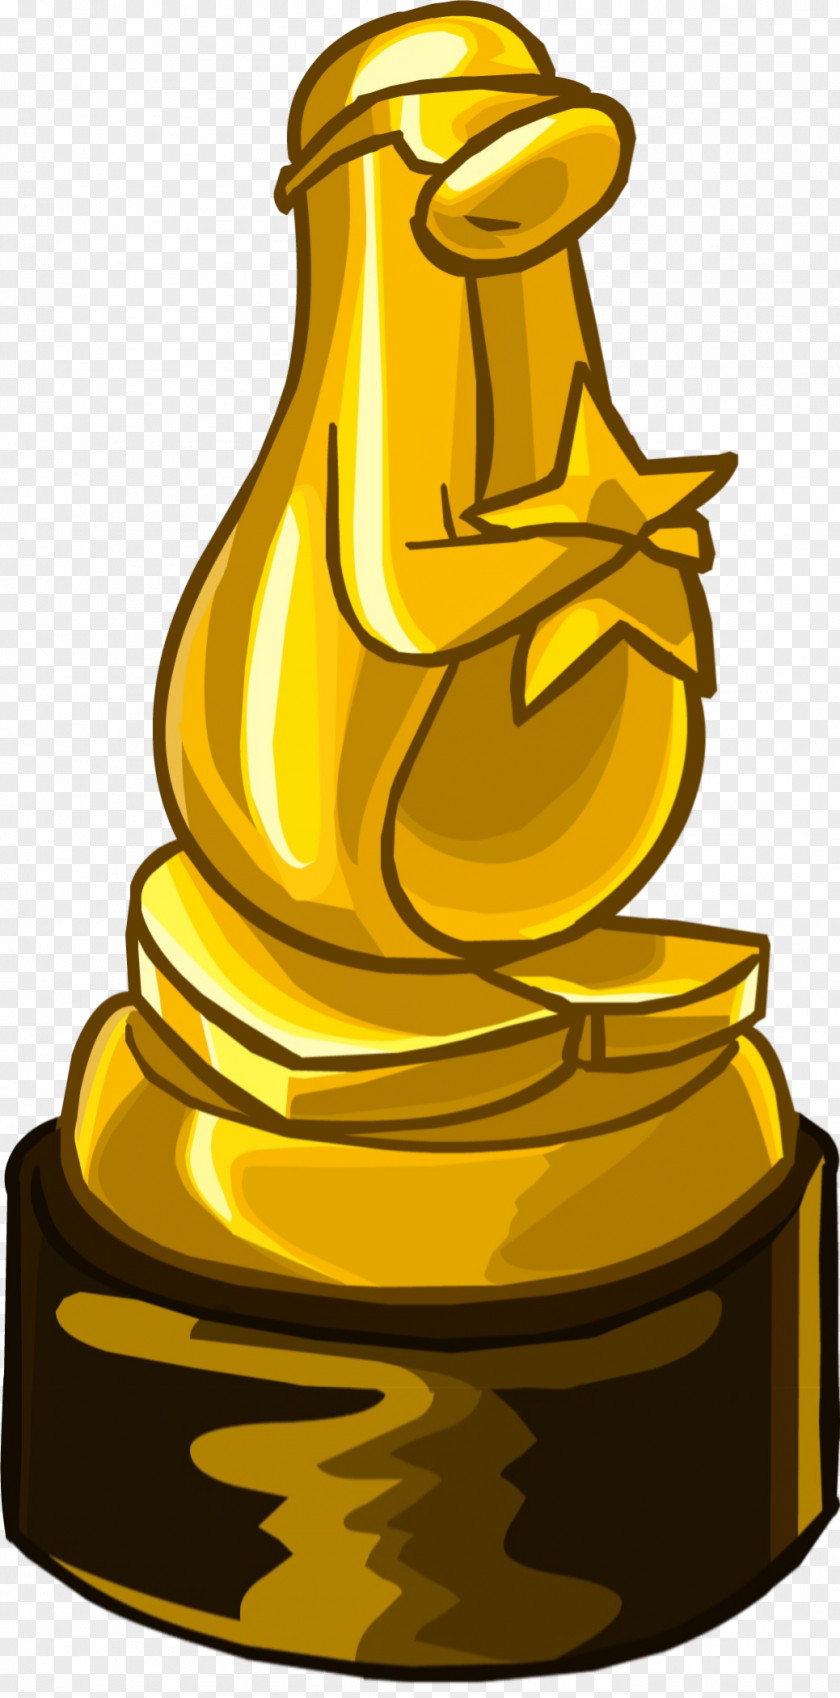 Certificate Gold Design Creeper Club Penguin Award Silver Clip Art PNG